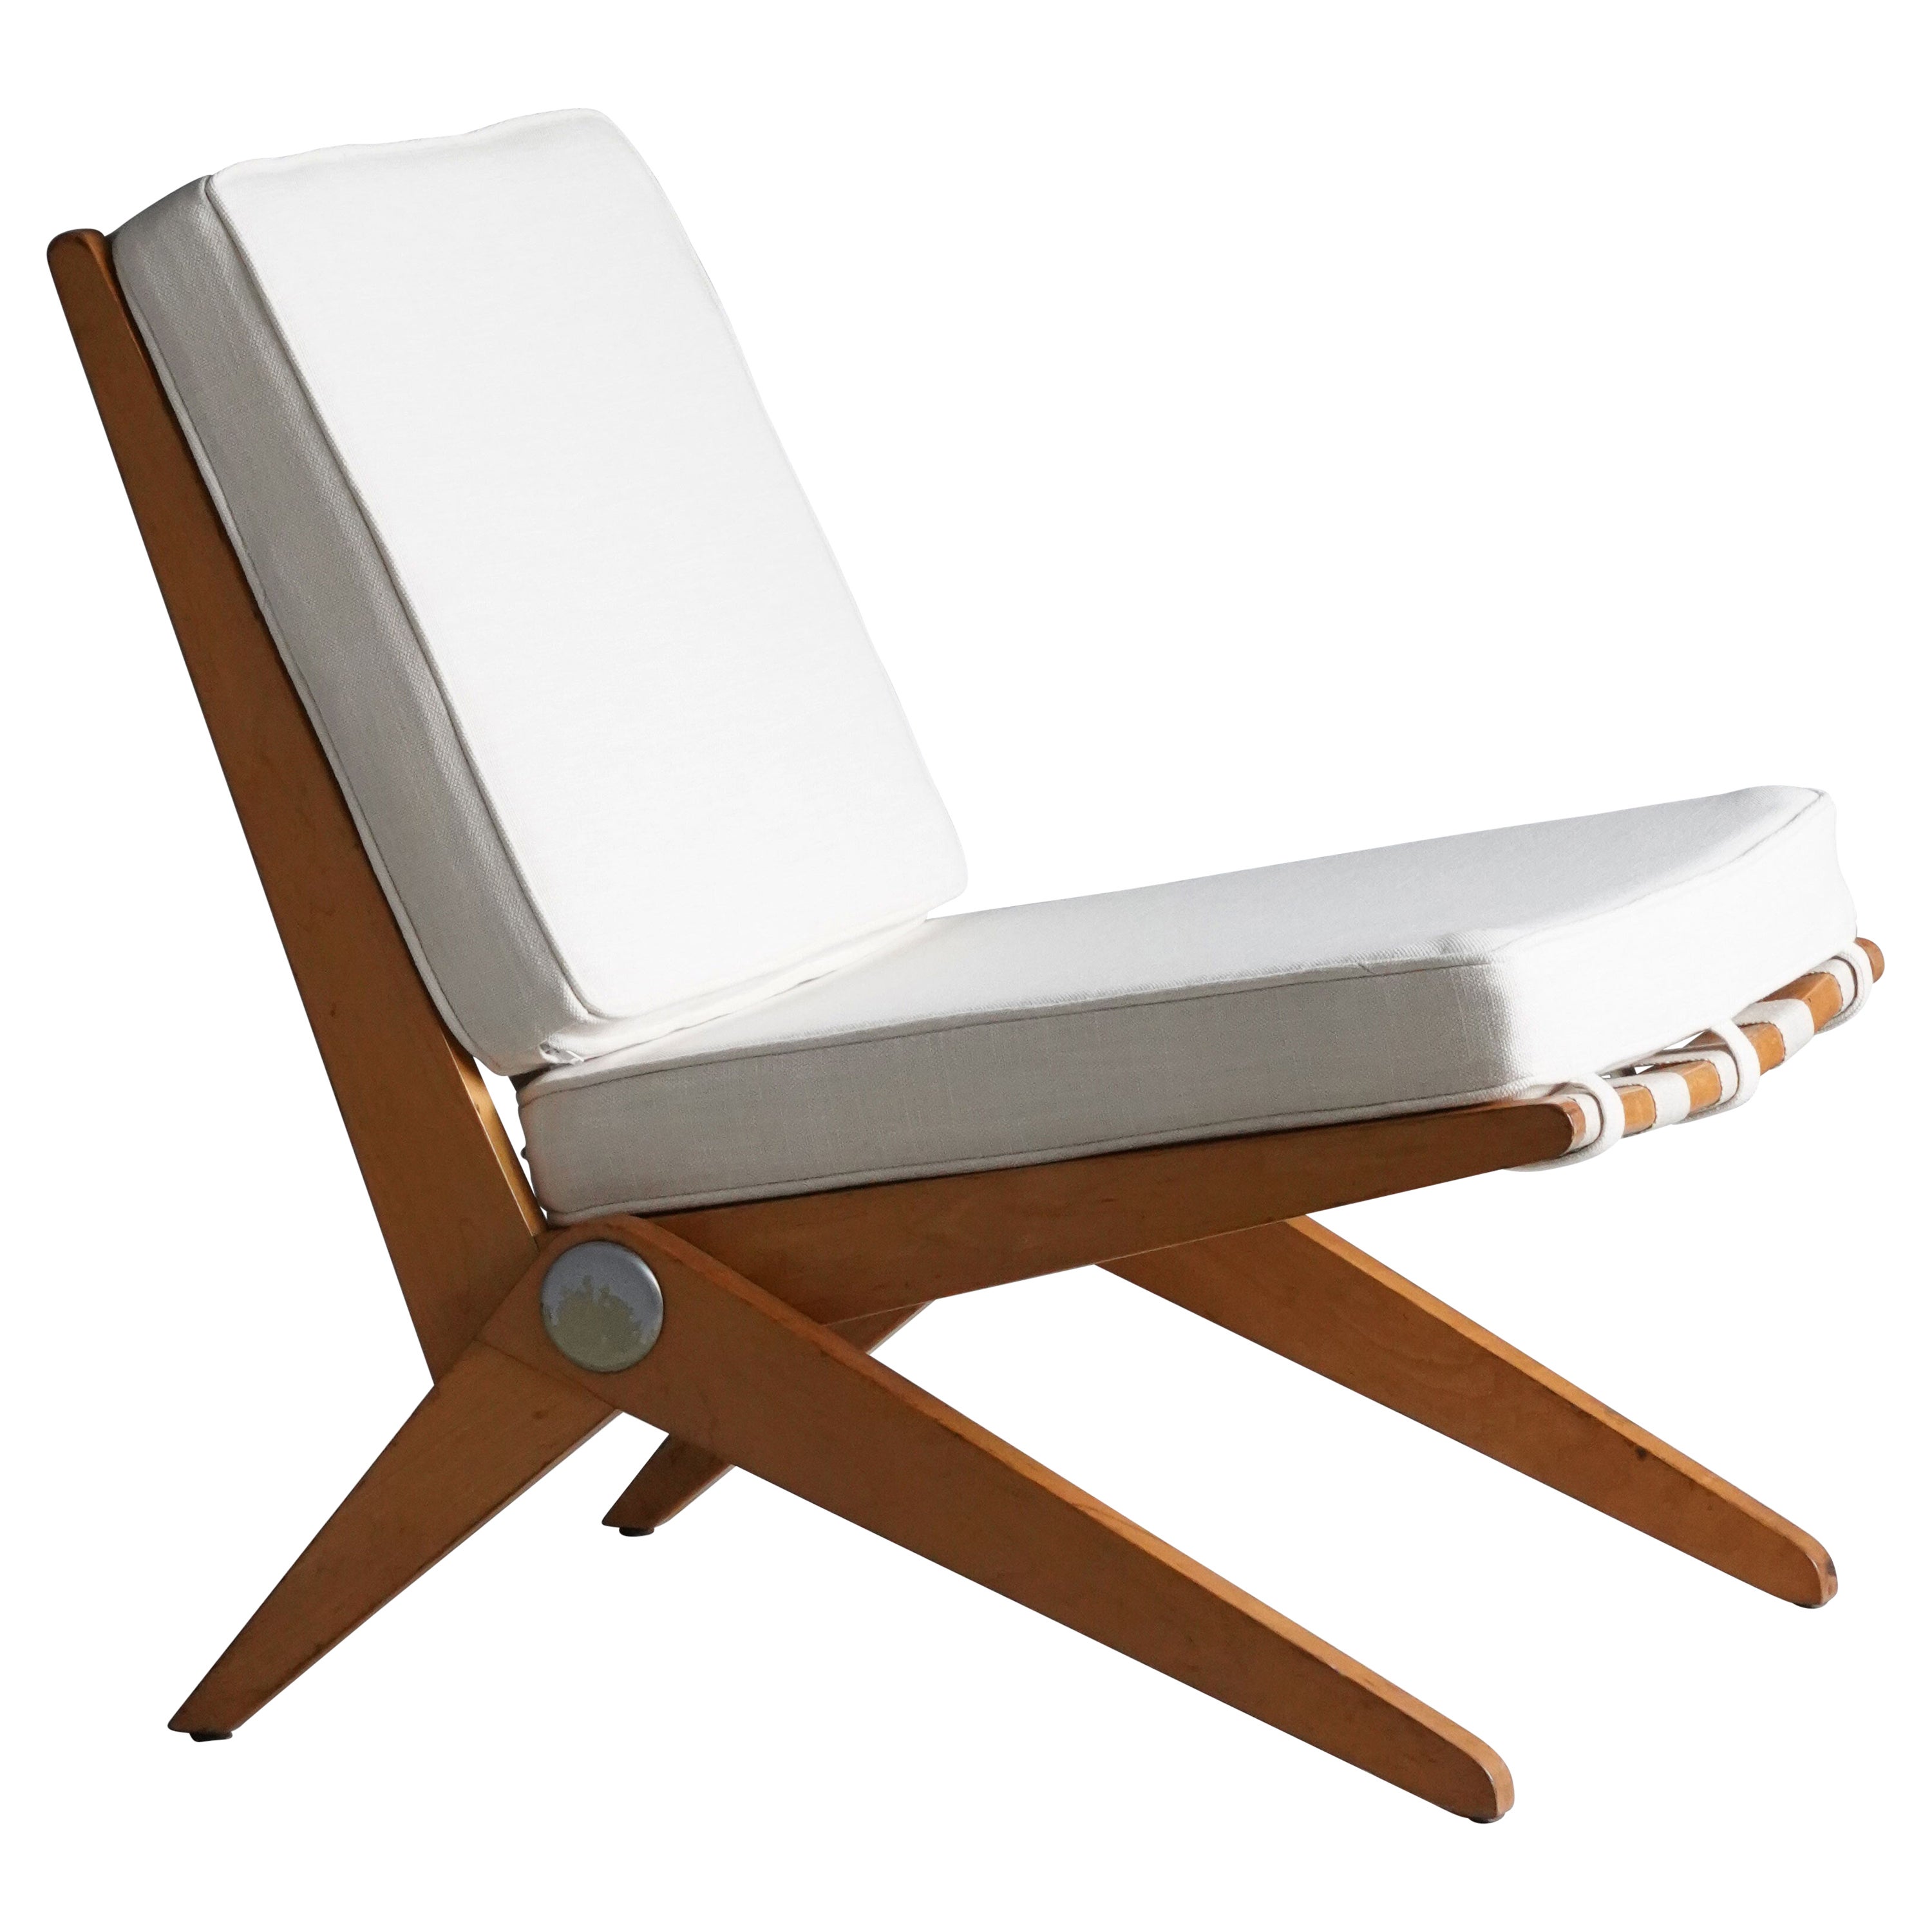 Pierre Jeanneret, Lounge Chair, Wood, Webbing, Fabric, Knoll, America, 1950s